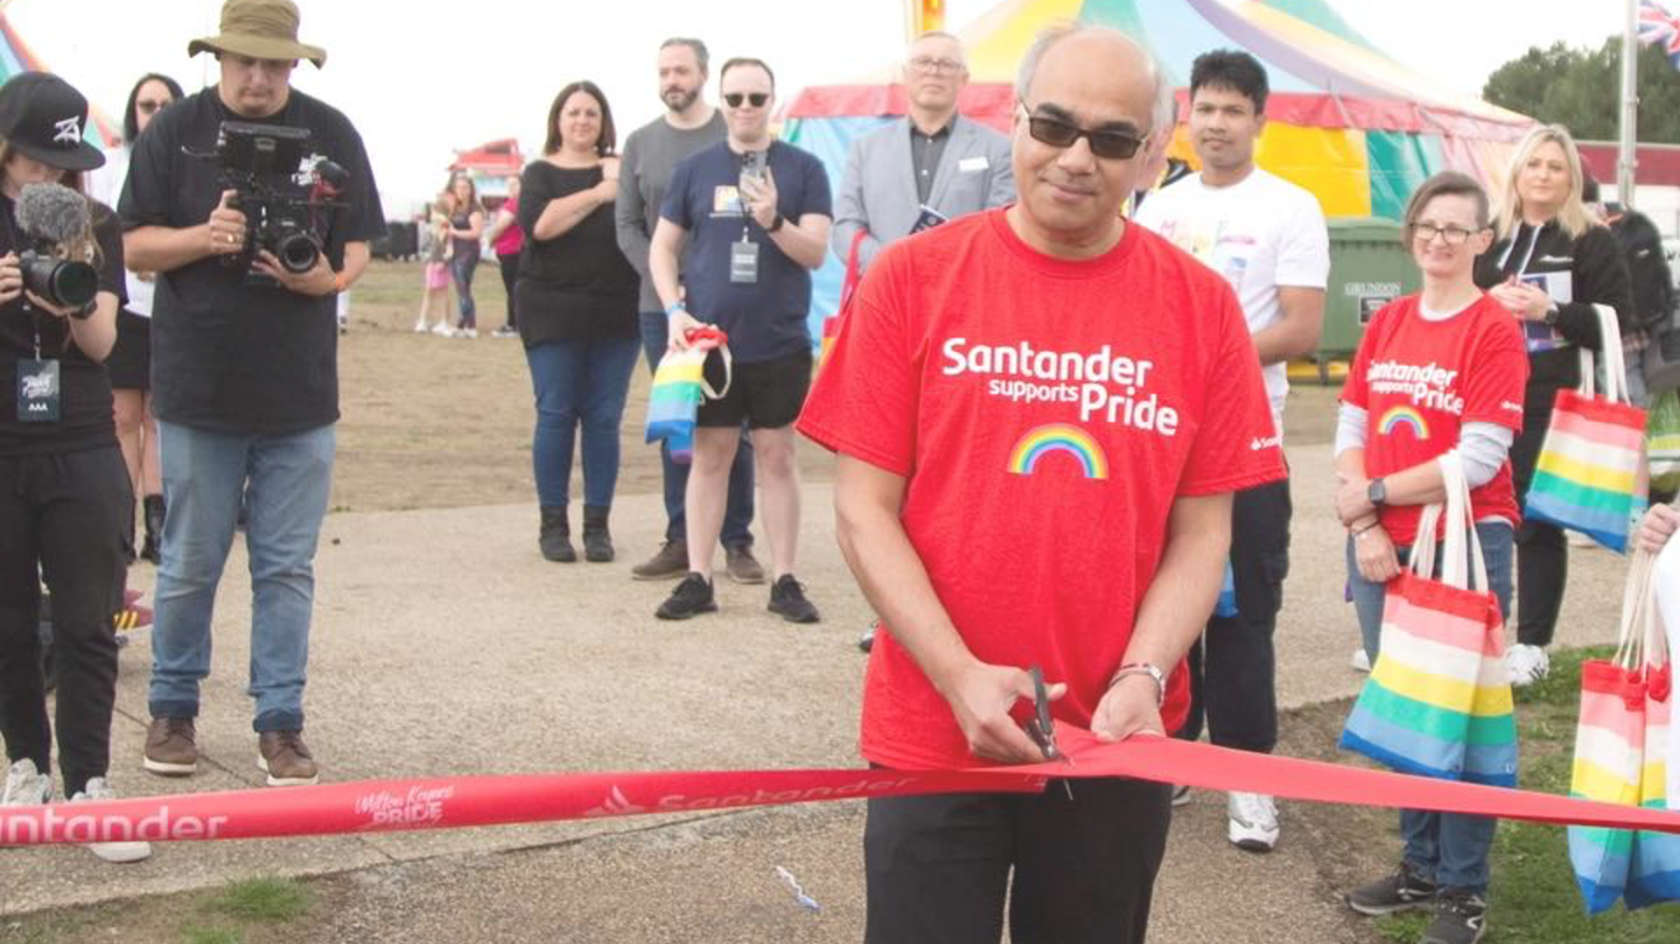 Santander announced as Headline Sponsor for this year’s Milton Keynes Pride Festival – MKFM 106.3FM